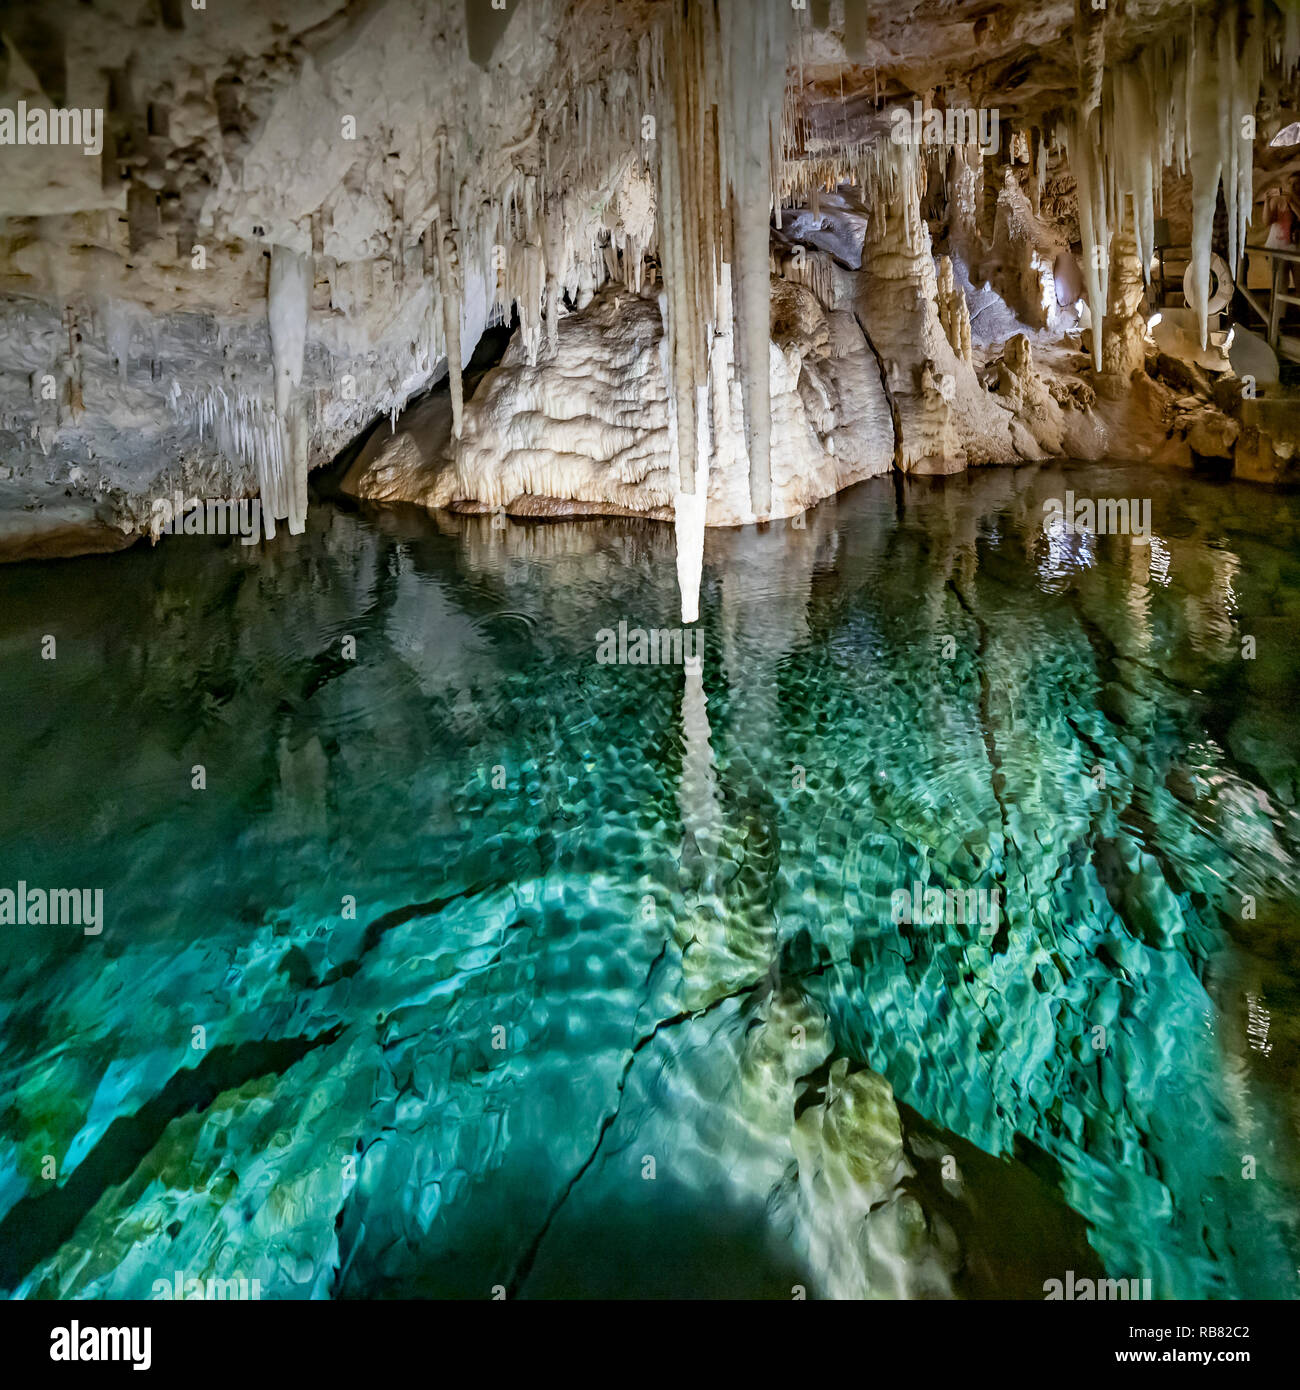 Hamilton, Burmuda. Crystal caves is one of Bermuda's must see natural wonders. Stock Photo